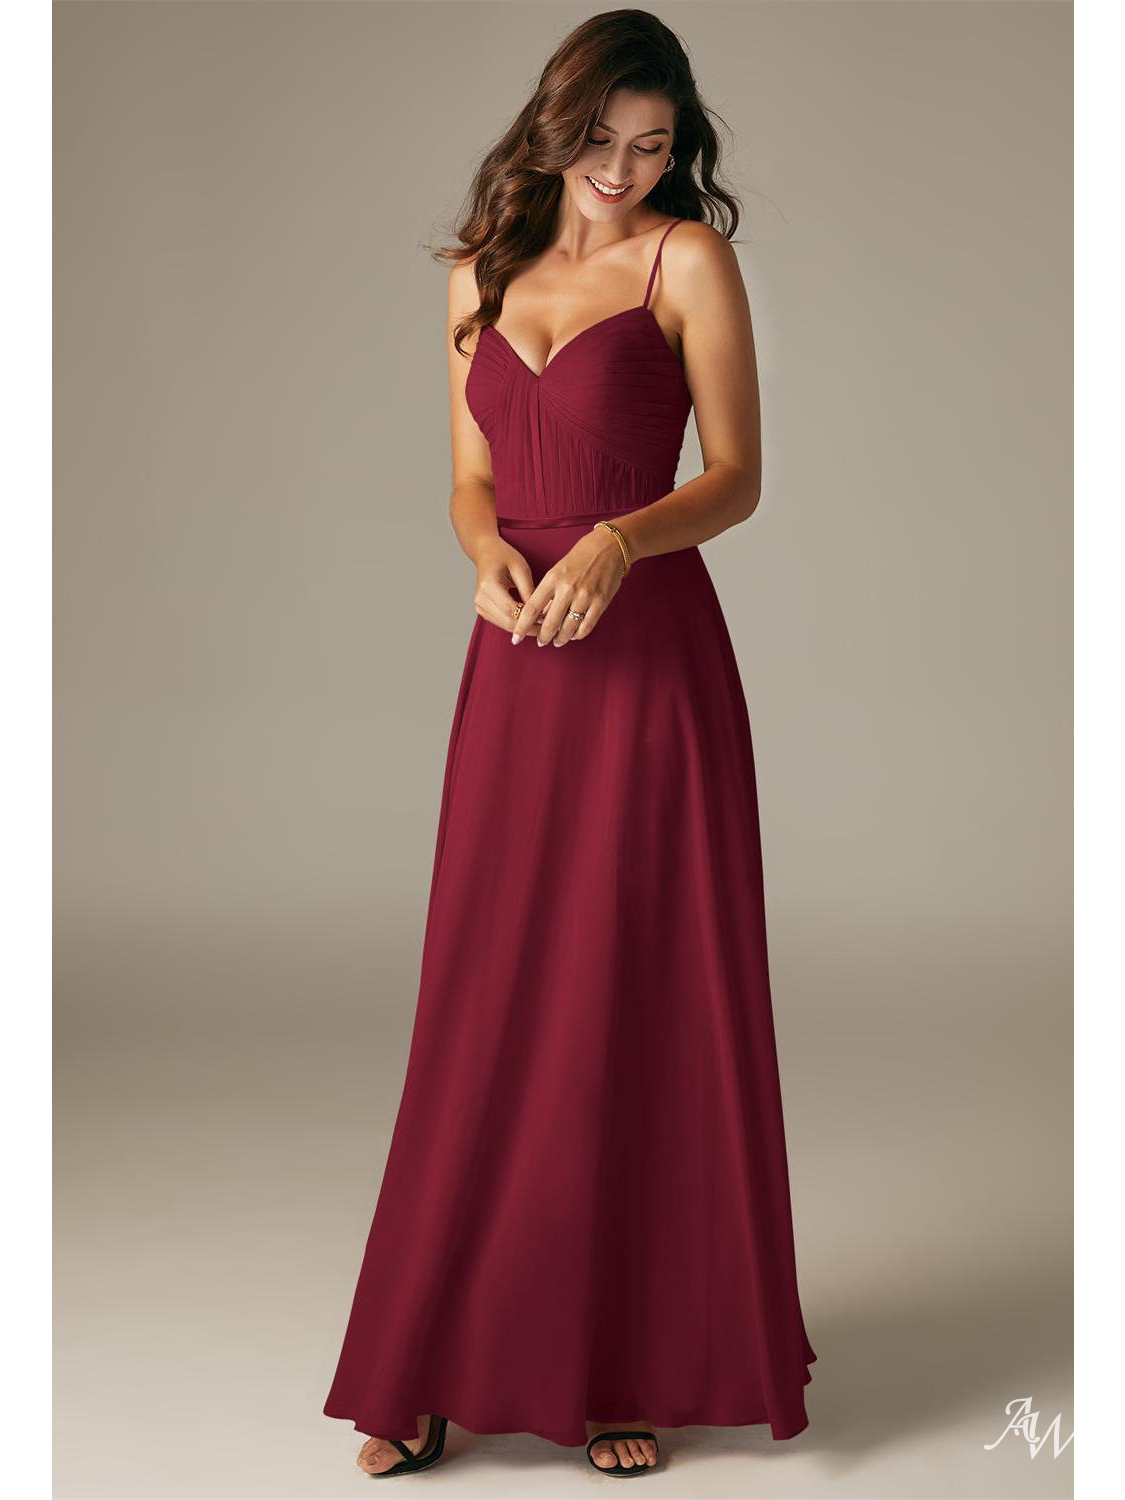 AW Georgia Dress, Burgundy Long Bridesmaid Dresses, 99.99 | AW Bridal